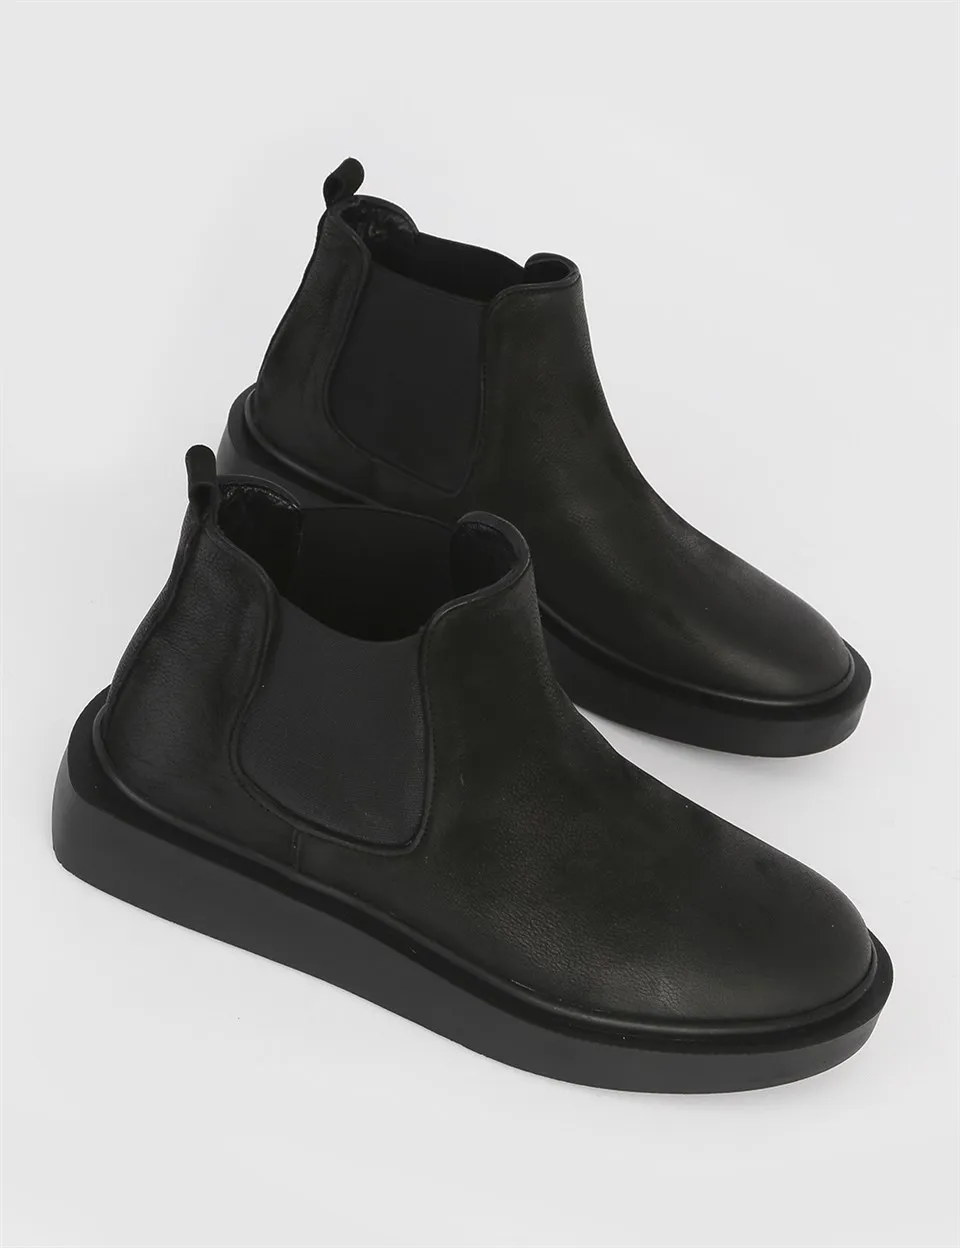 

ILVi-Genuine Leather Handmade Brave Black Nubuck Men's BootMen Shoes 2020 Fall/Winter